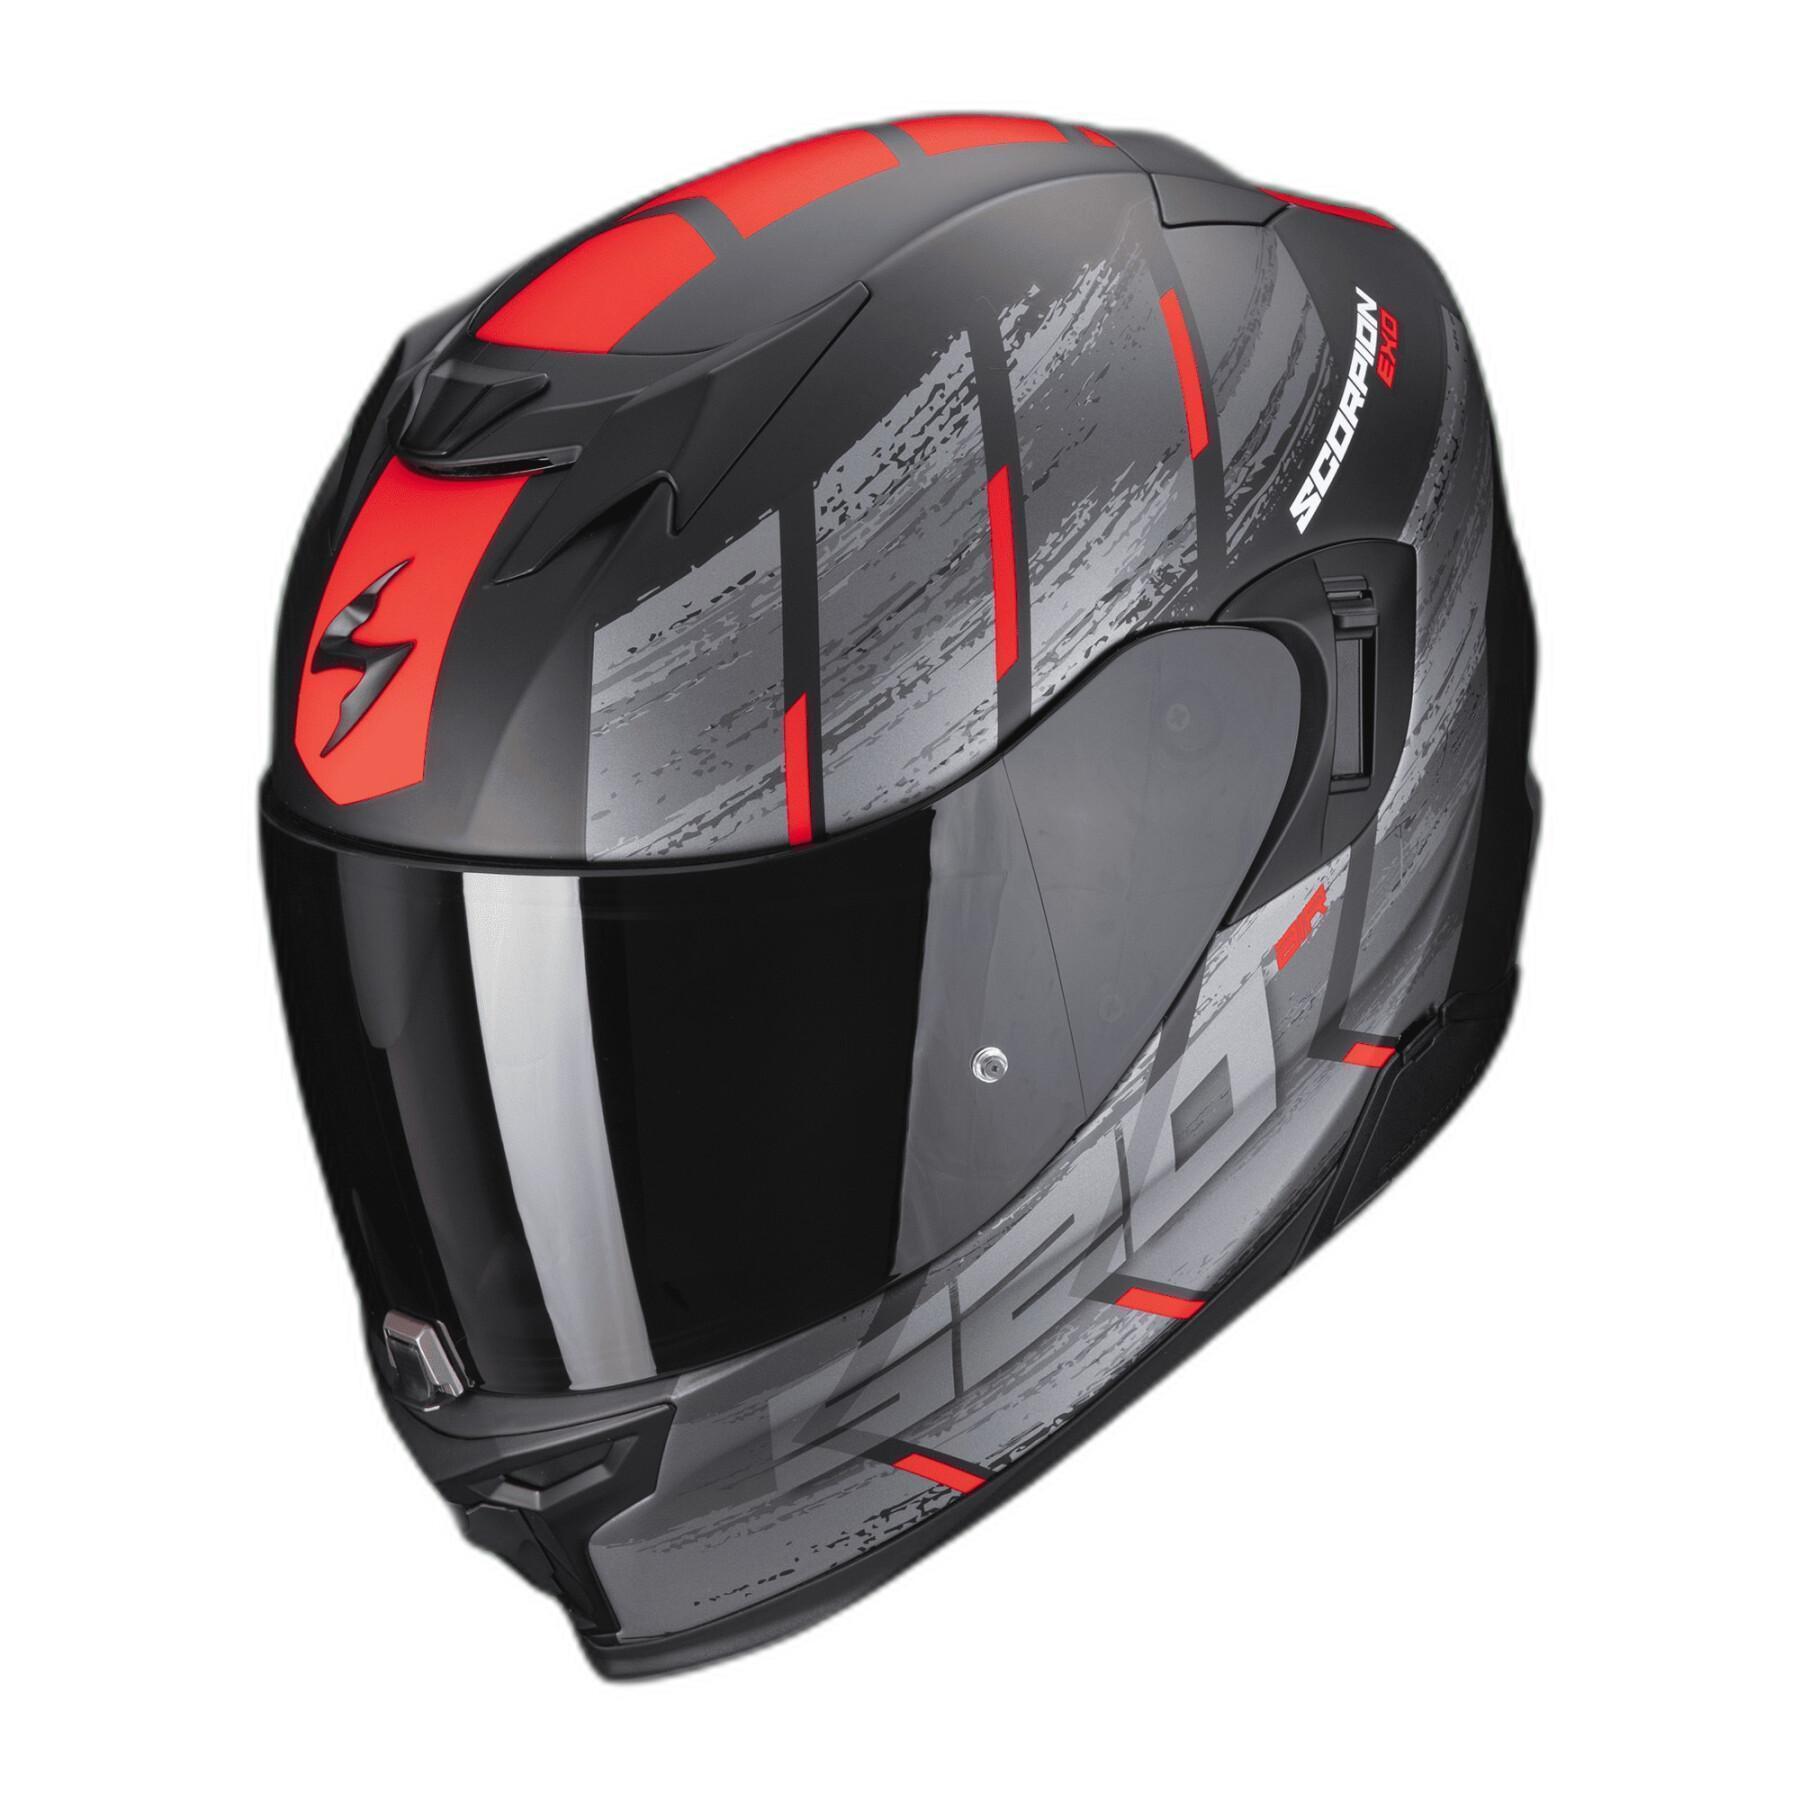 Full face motorcycle helmet Scorpion Exo-520 Evo Air Maha ECE 22-06